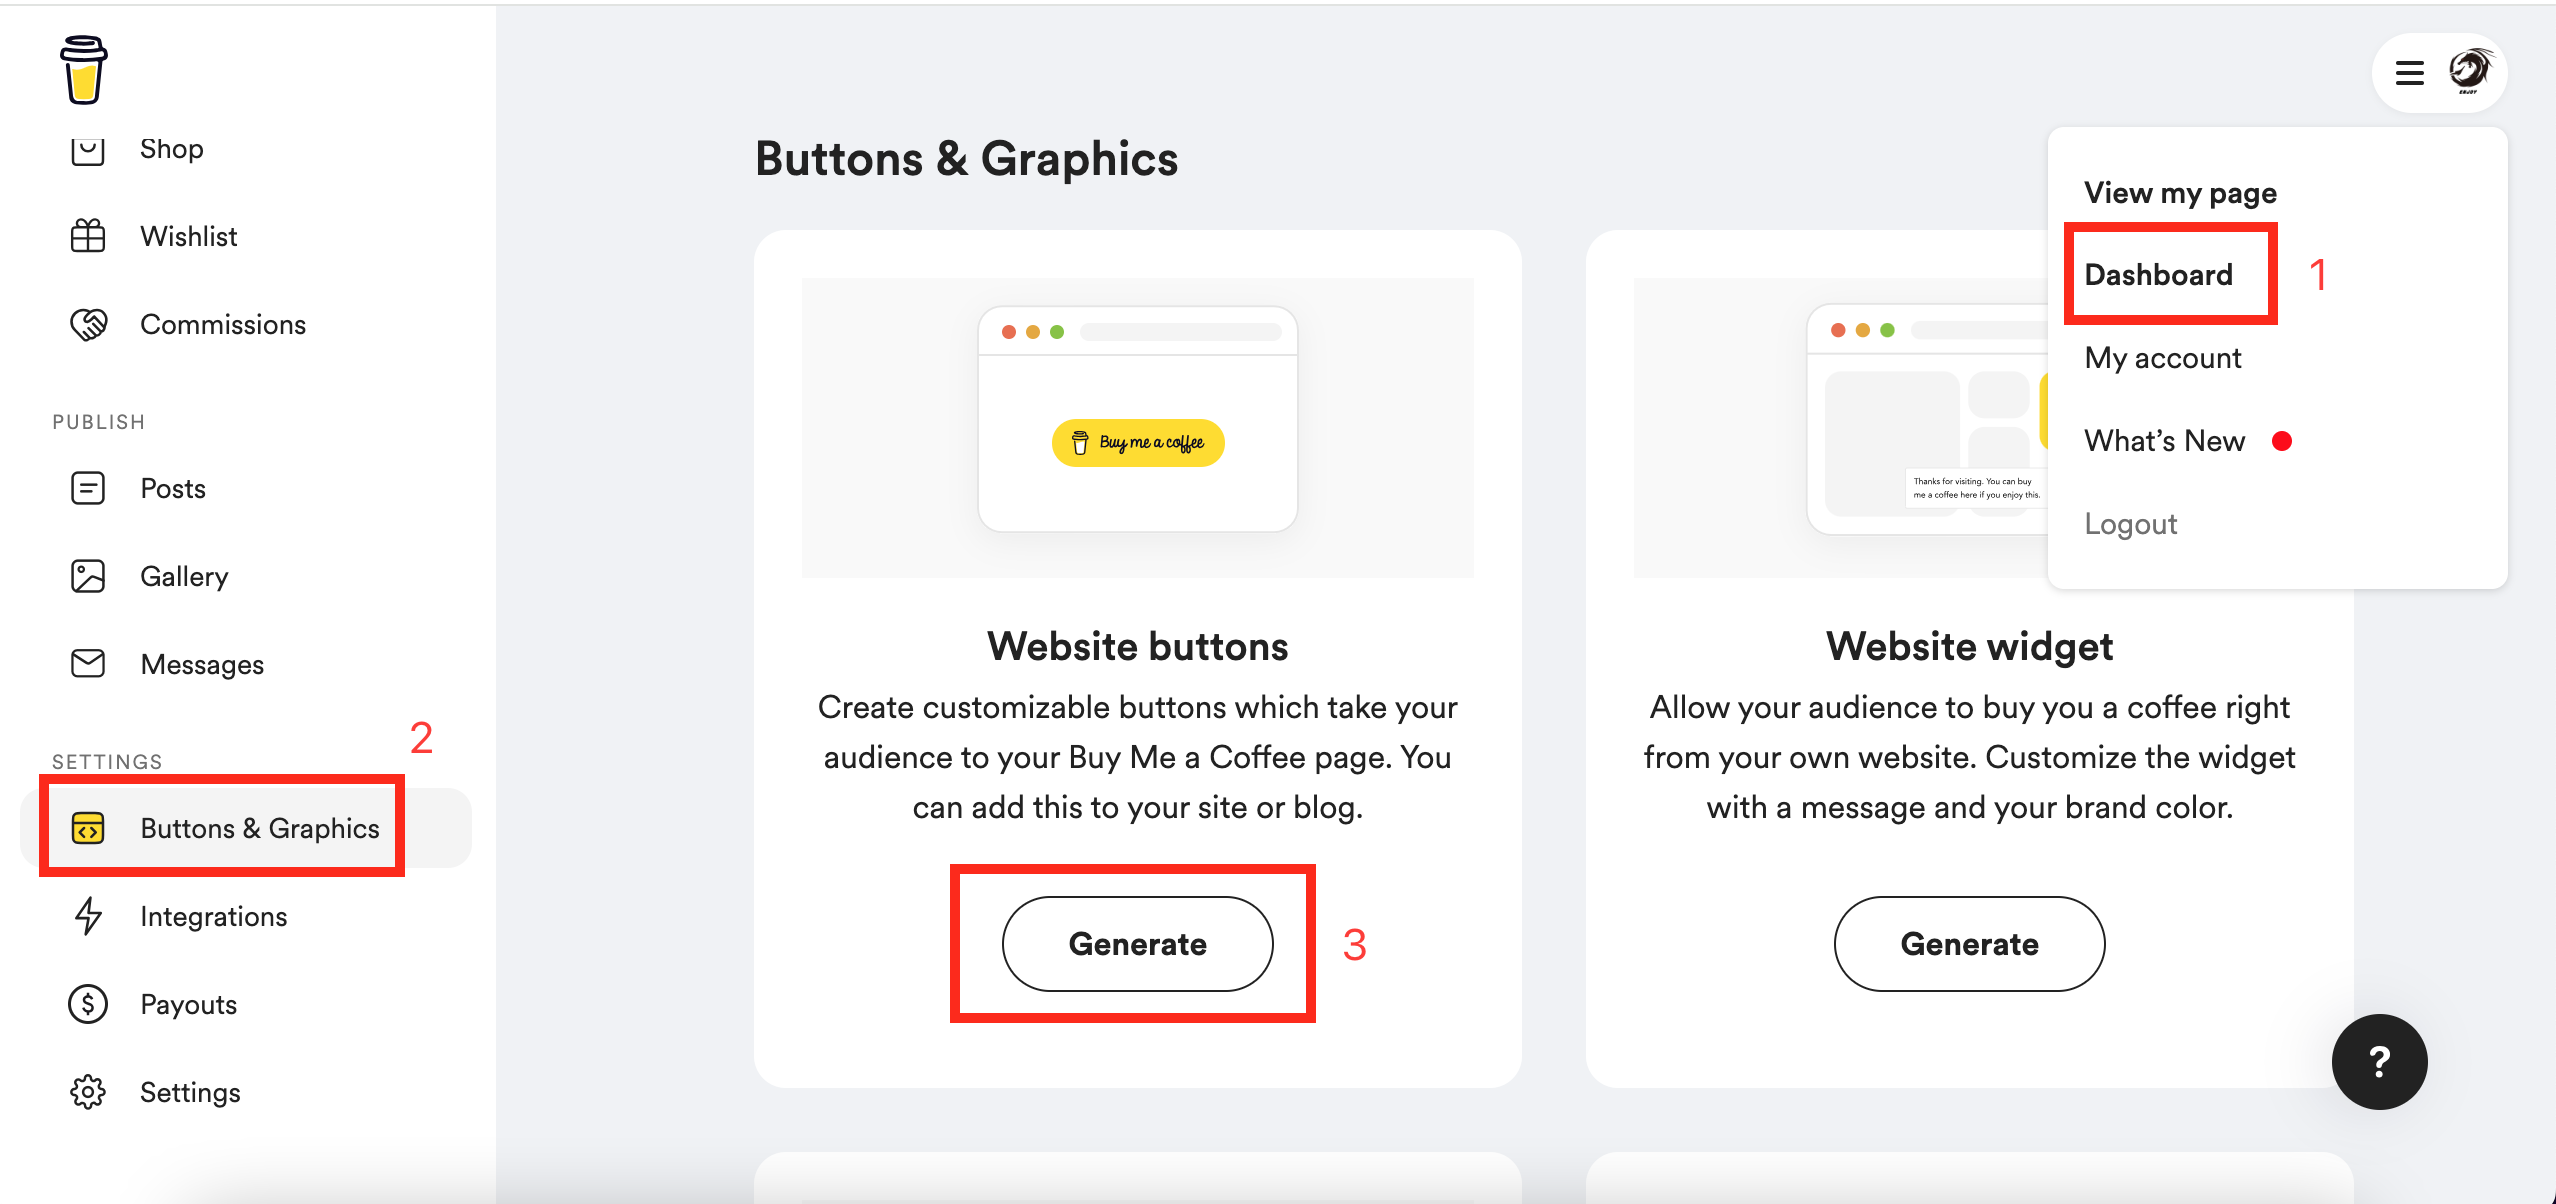 Website buttons generate